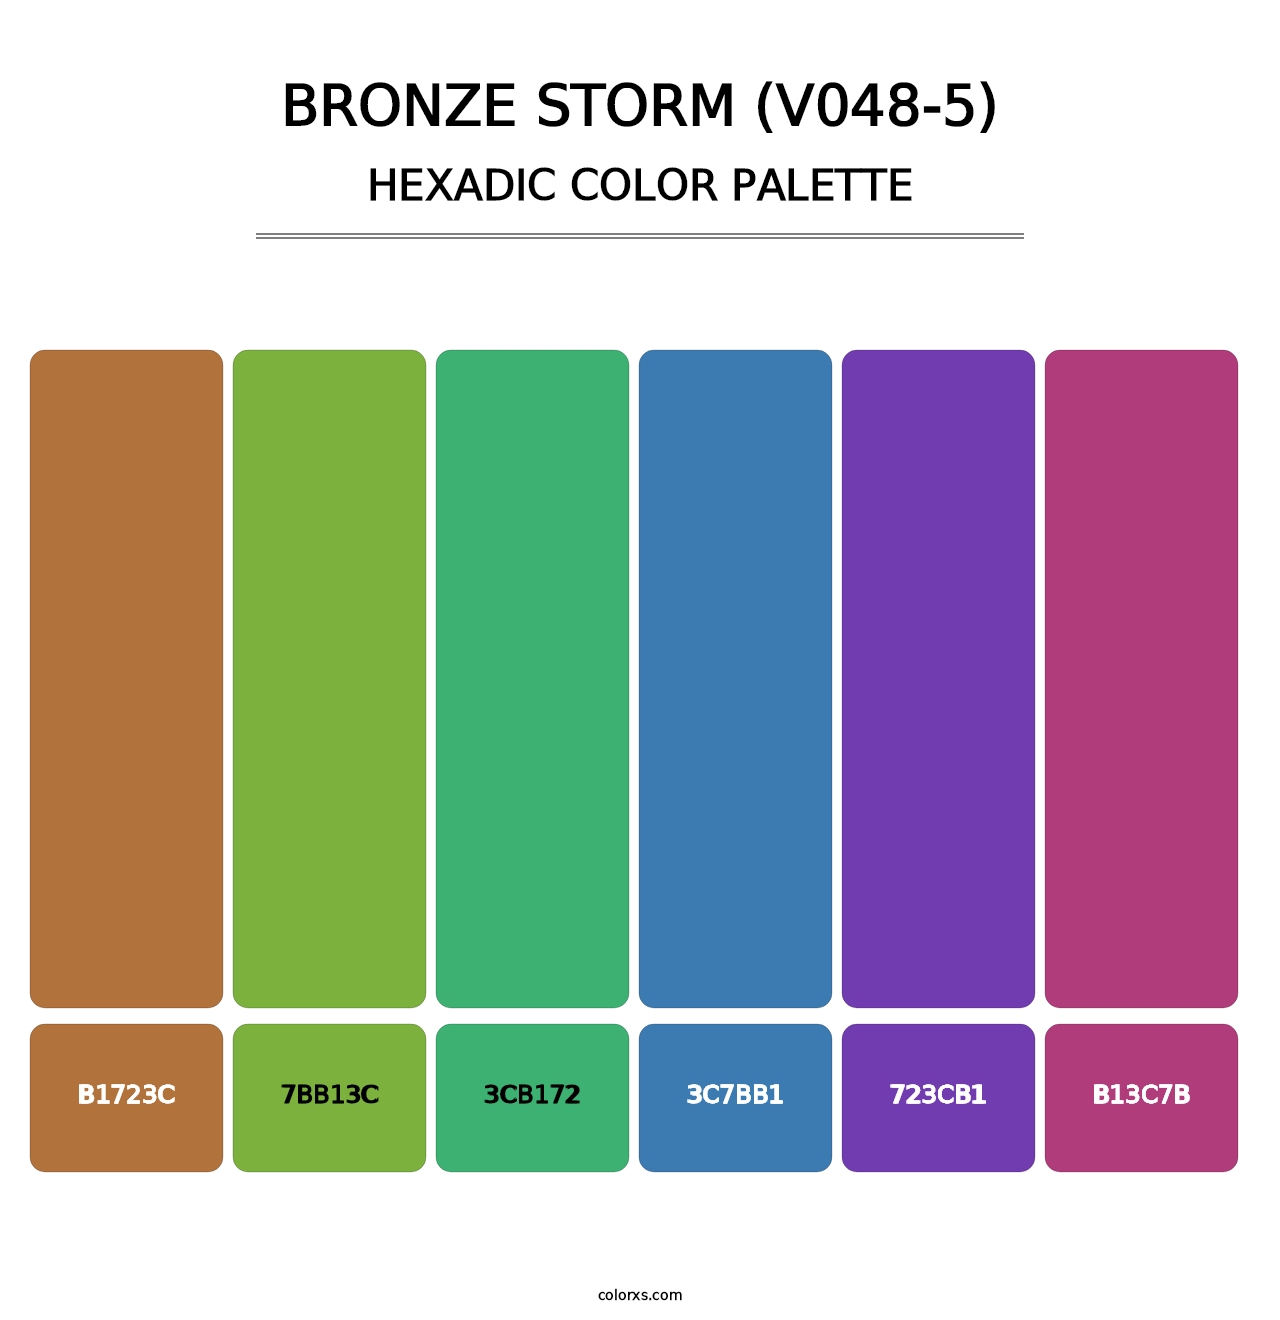 Bronze Storm (V048-5) - Hexadic Color Palette